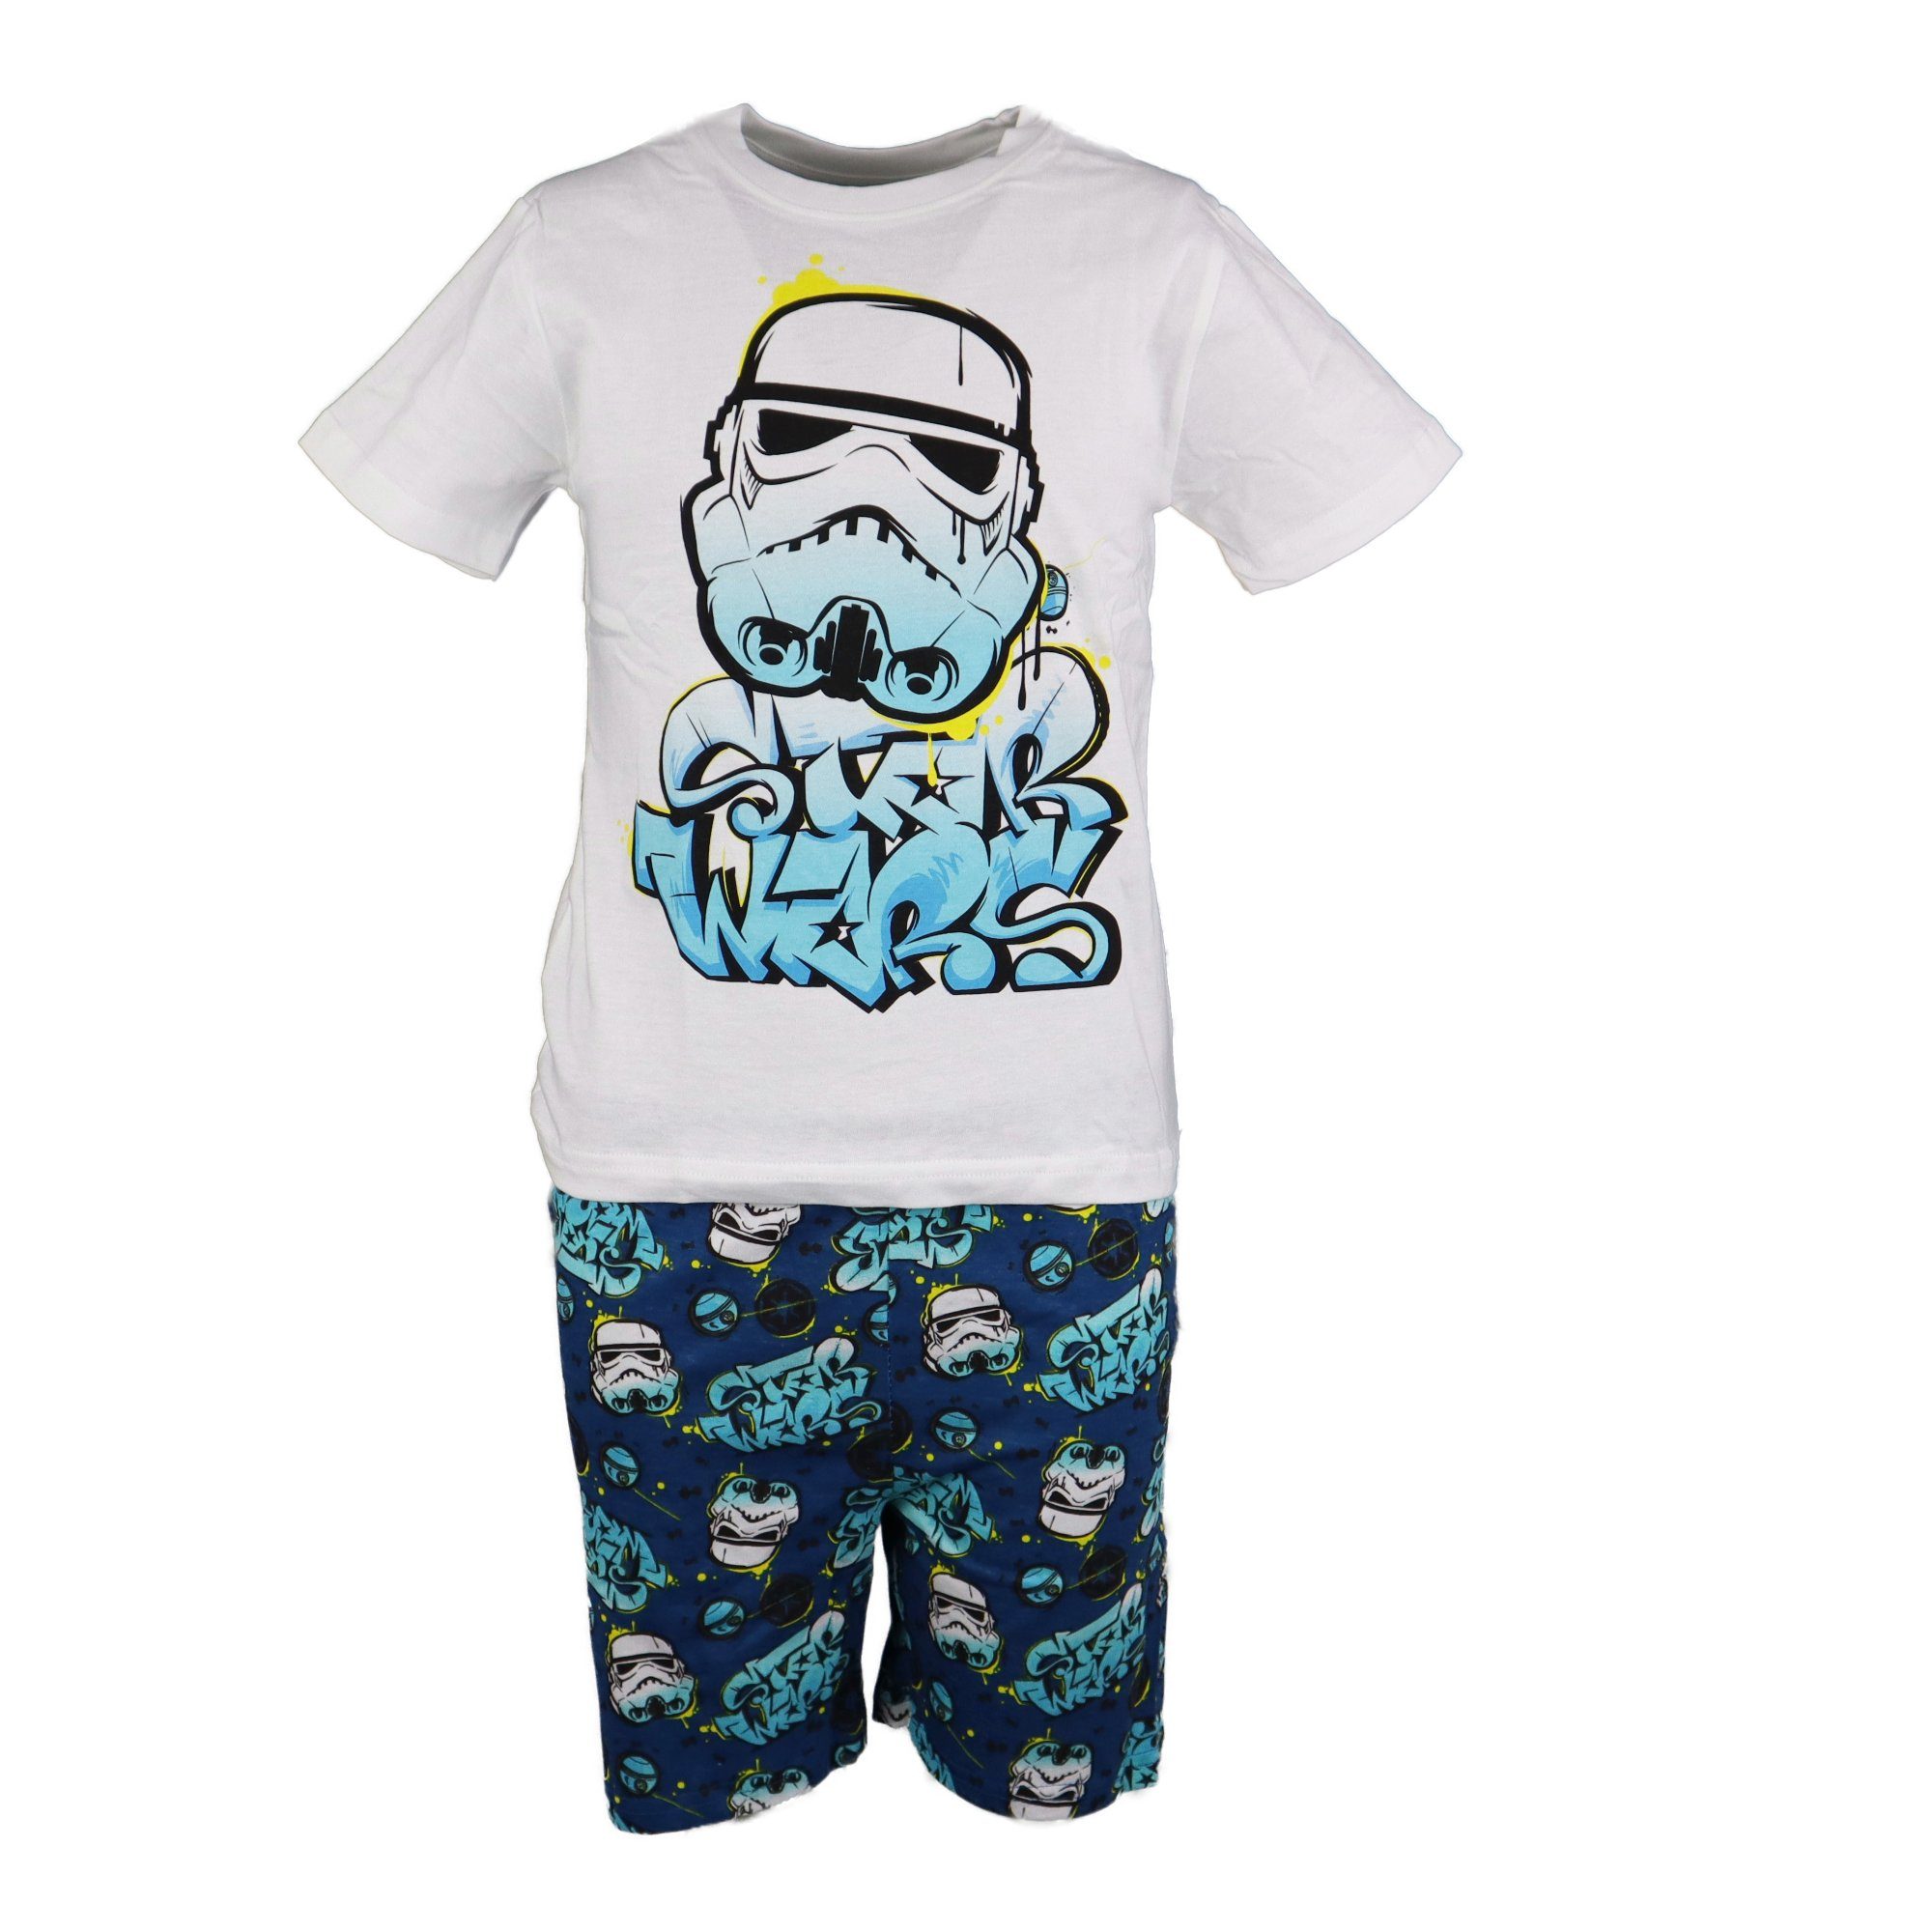 Star Wars Schlafanzug Storm Trooper Kinder Pyjama kurz Gr. 110 bis 140, 100% Baumwolle Bunt